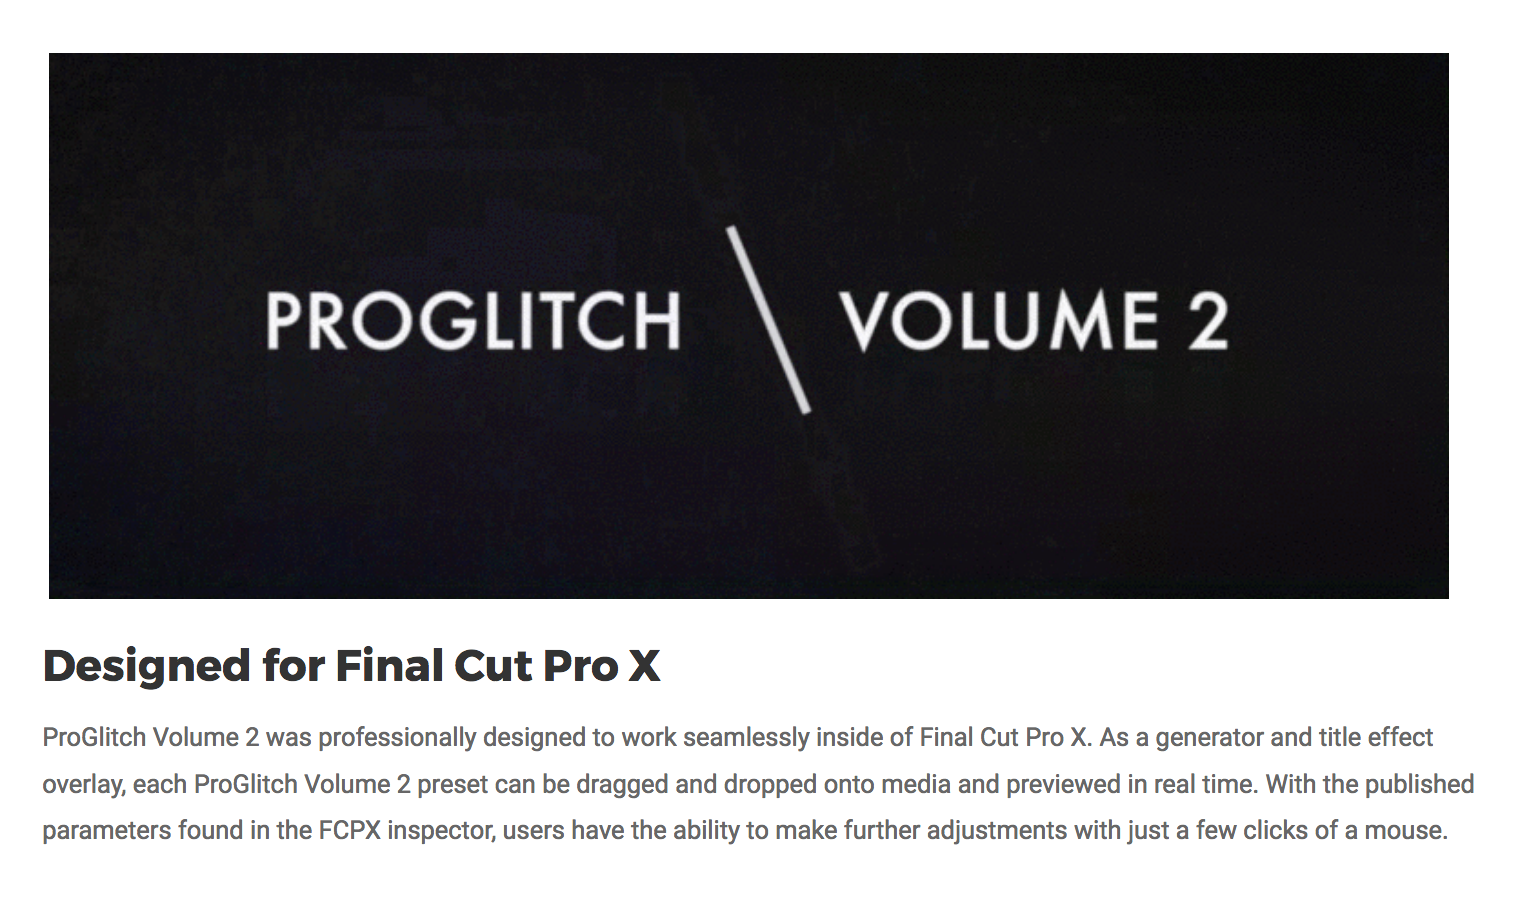 ProGlitch Volume 2 - Pixel Film Effects - Final Cut Pro X Plugins